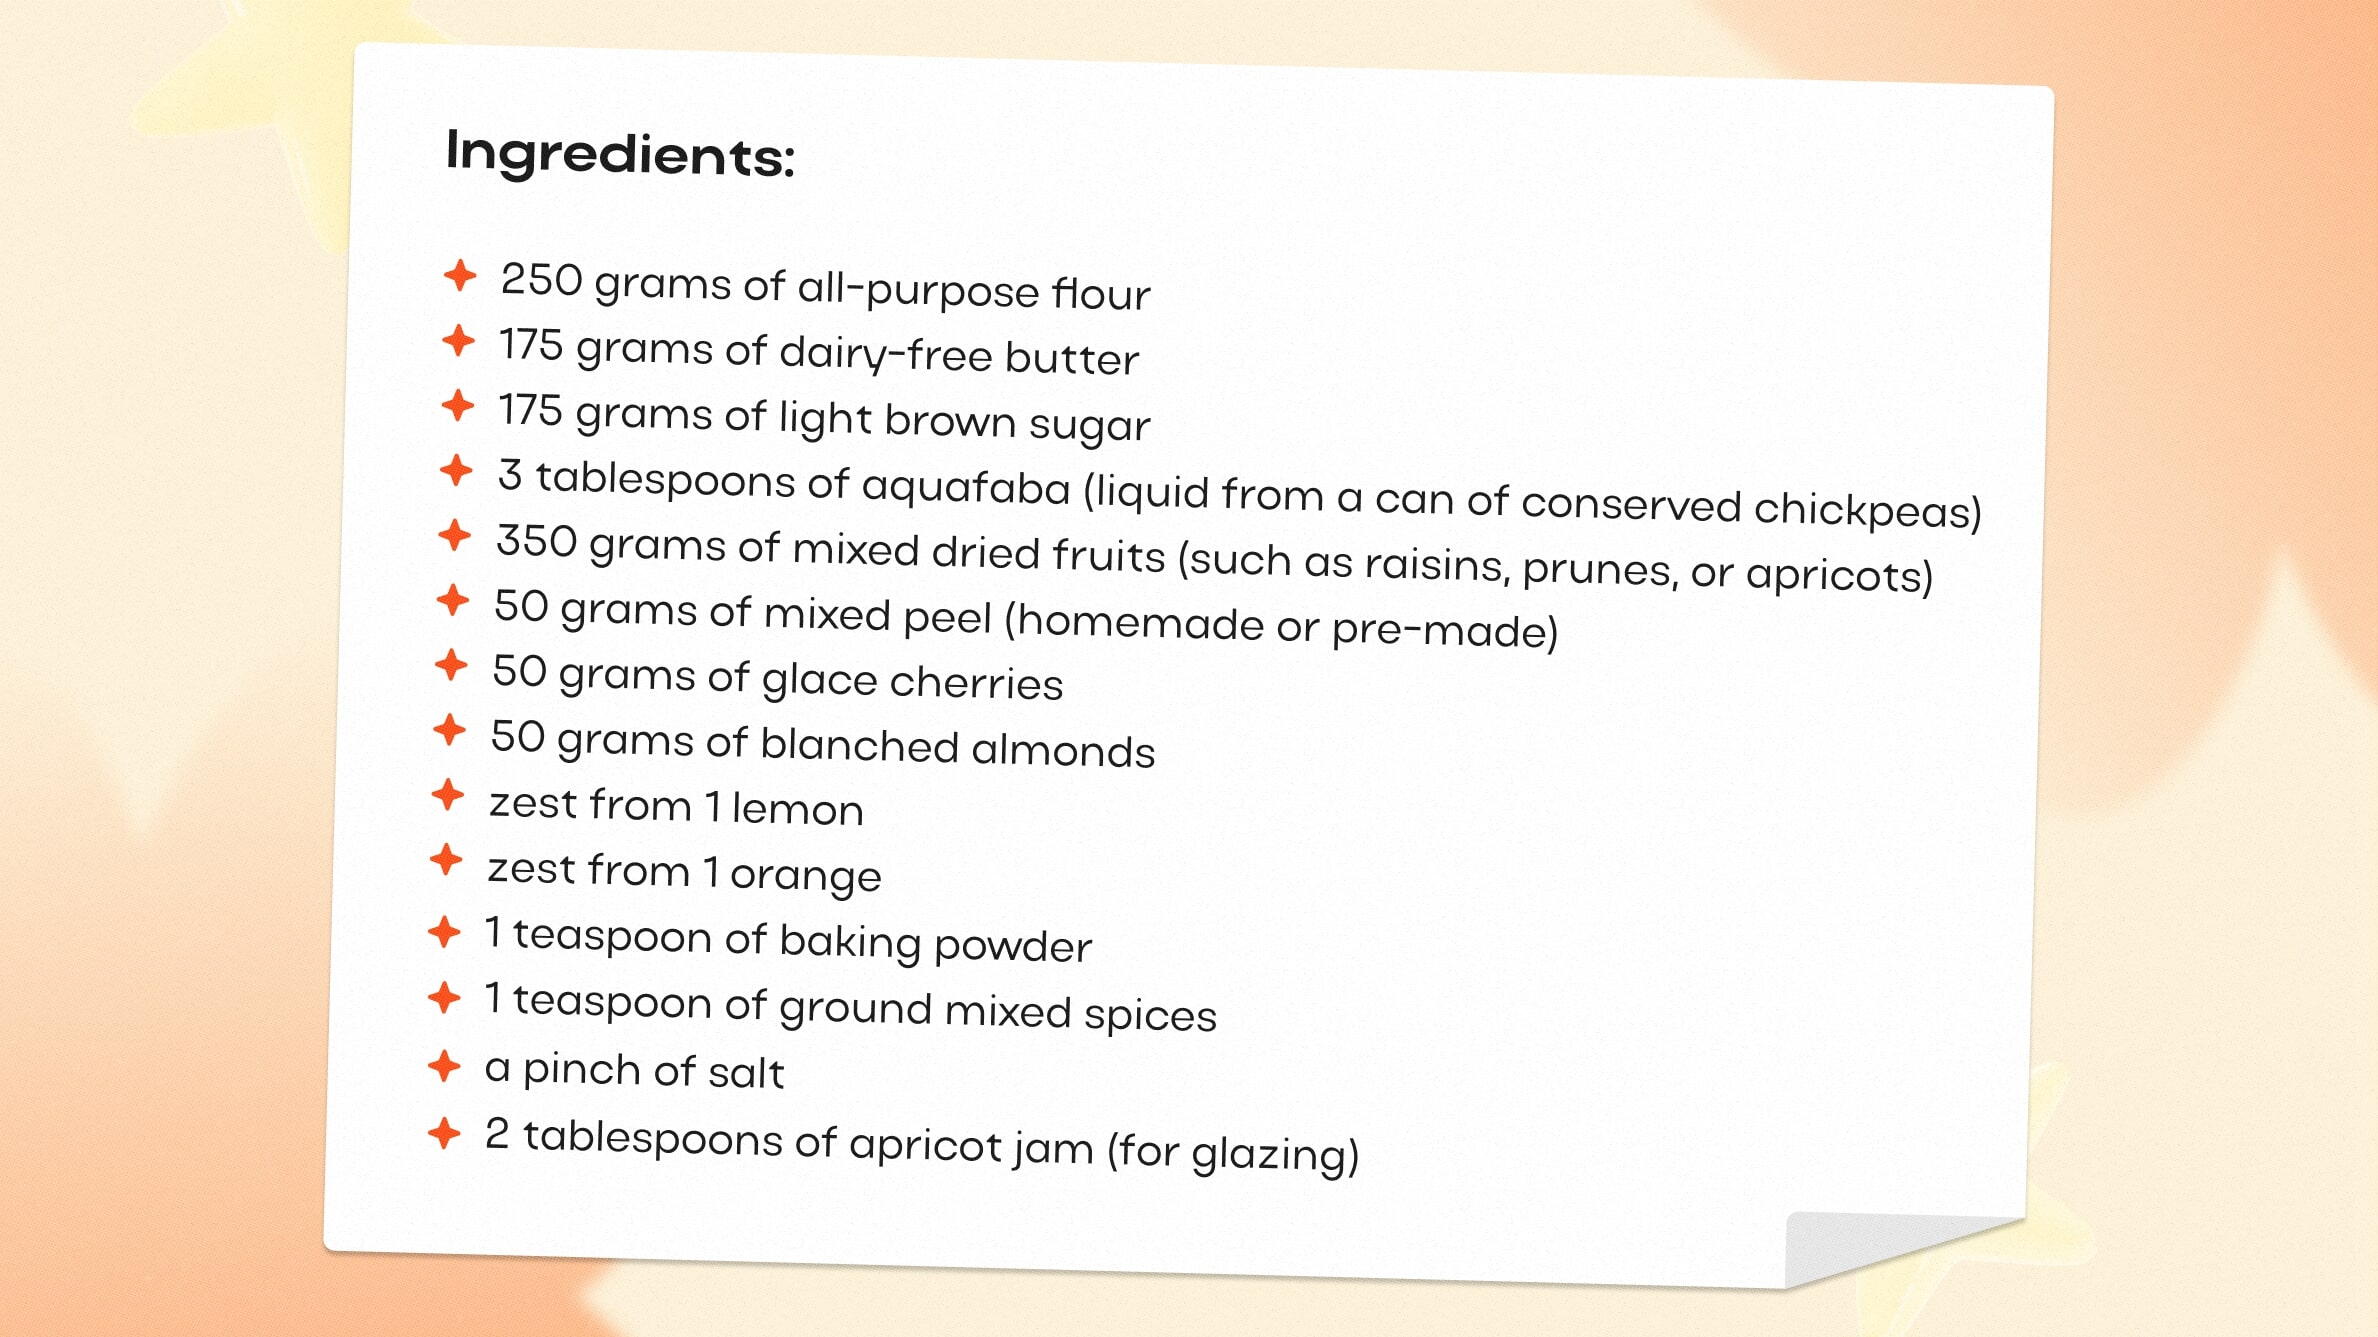 Ingredients for vegan Simnel cake